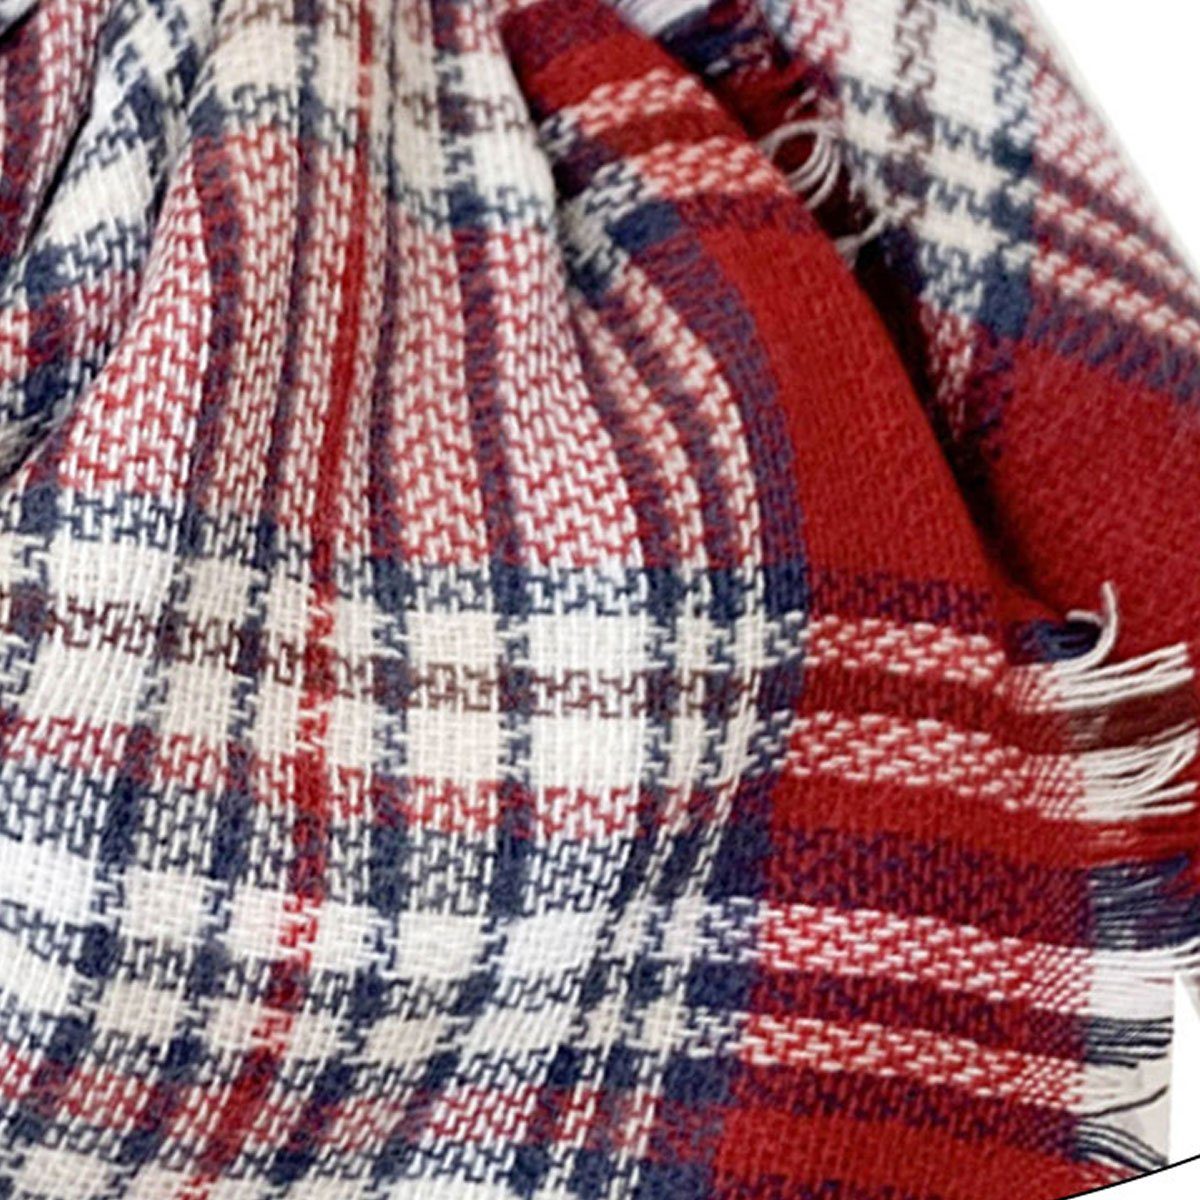 den für Warmer Karierter Datum rot Schal Modeschal weiß Damen Jormftte Frauen kariert Winter,Damen-Schals,Für